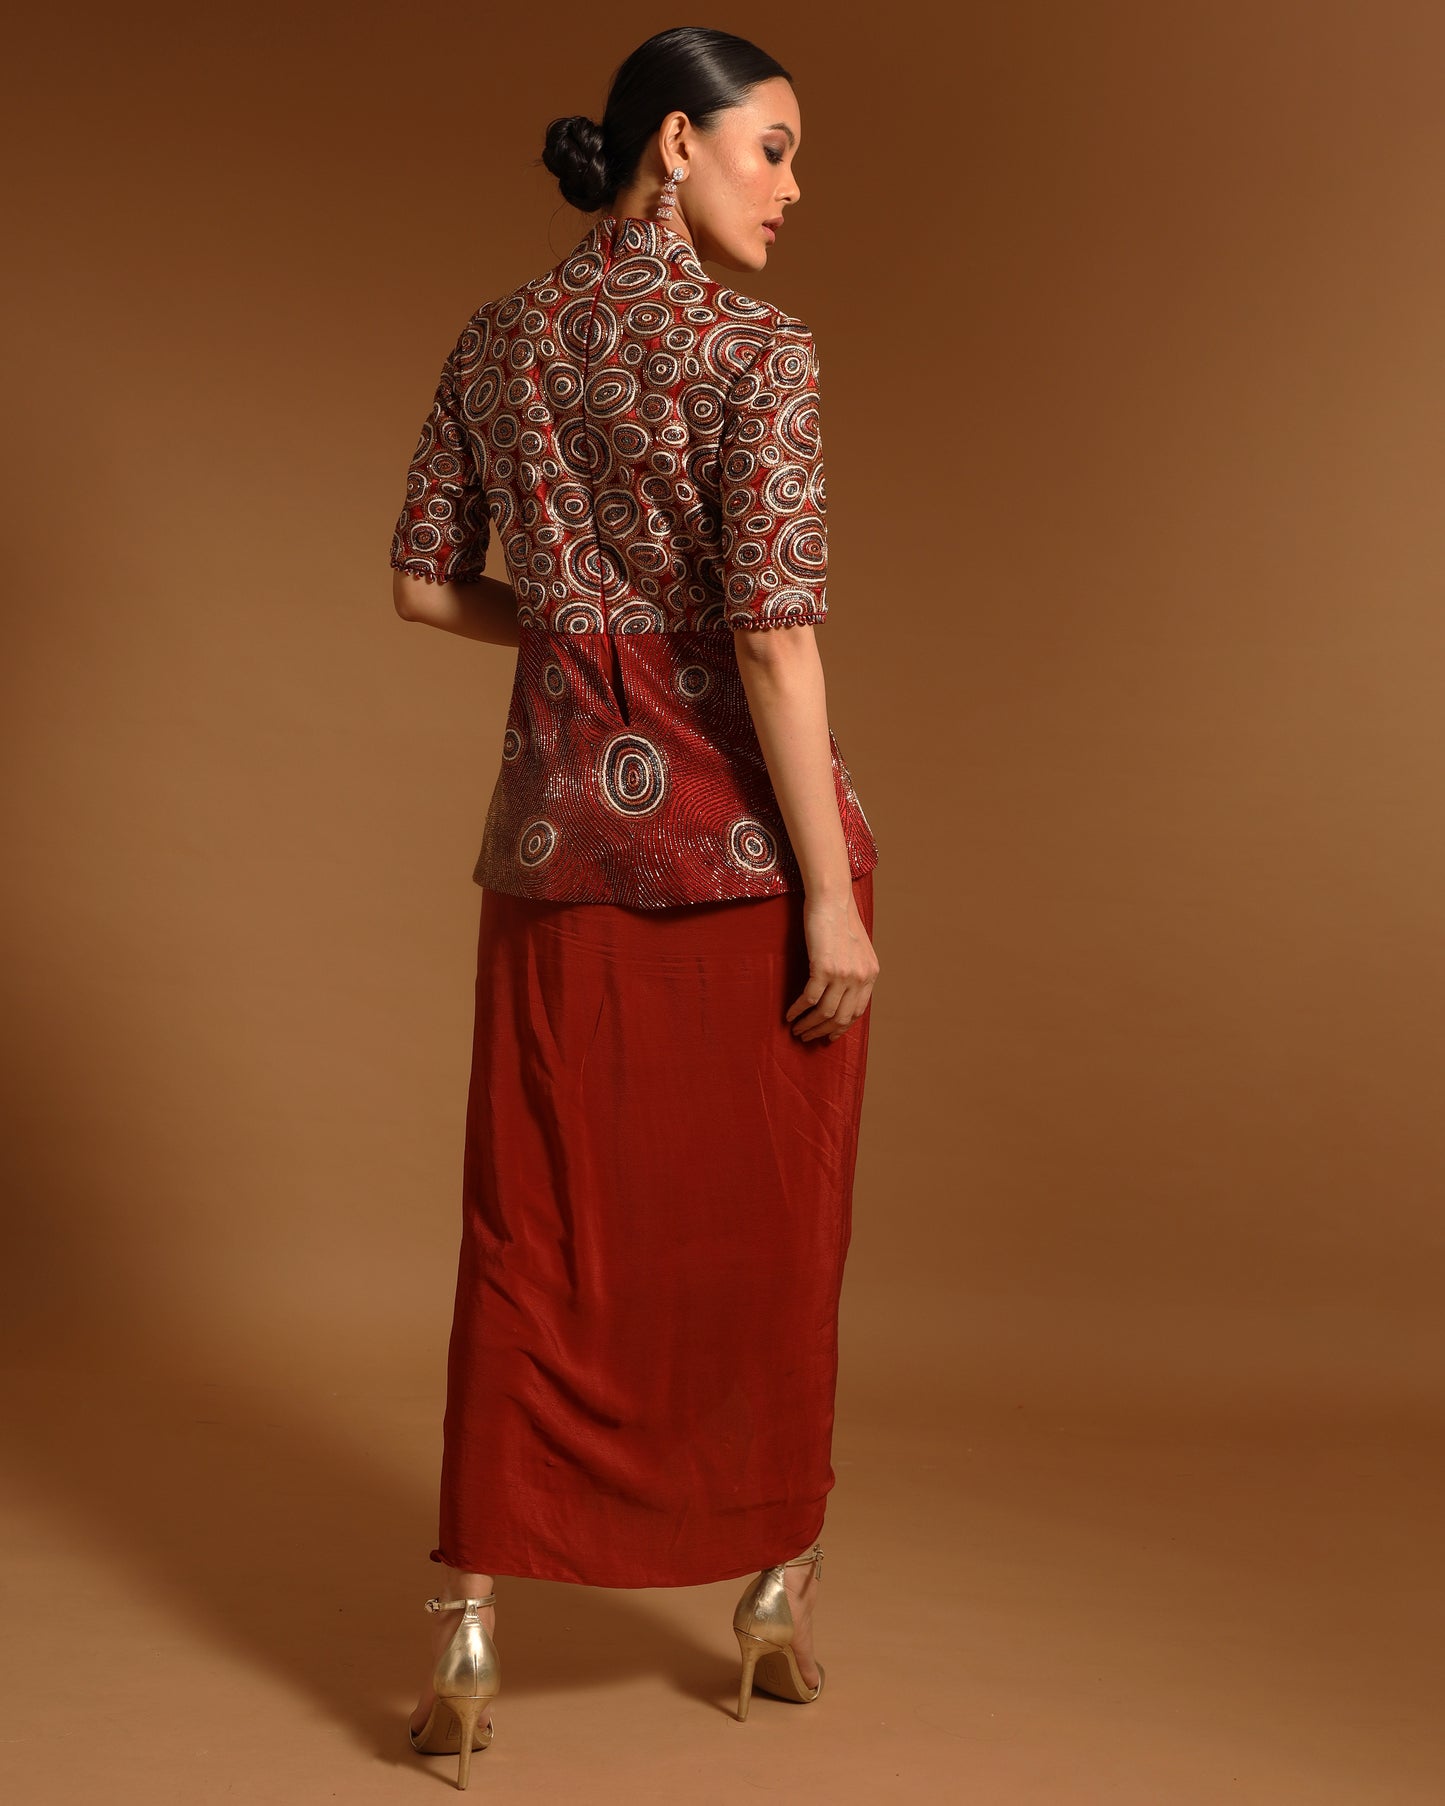 Red Ajrakh drape dress